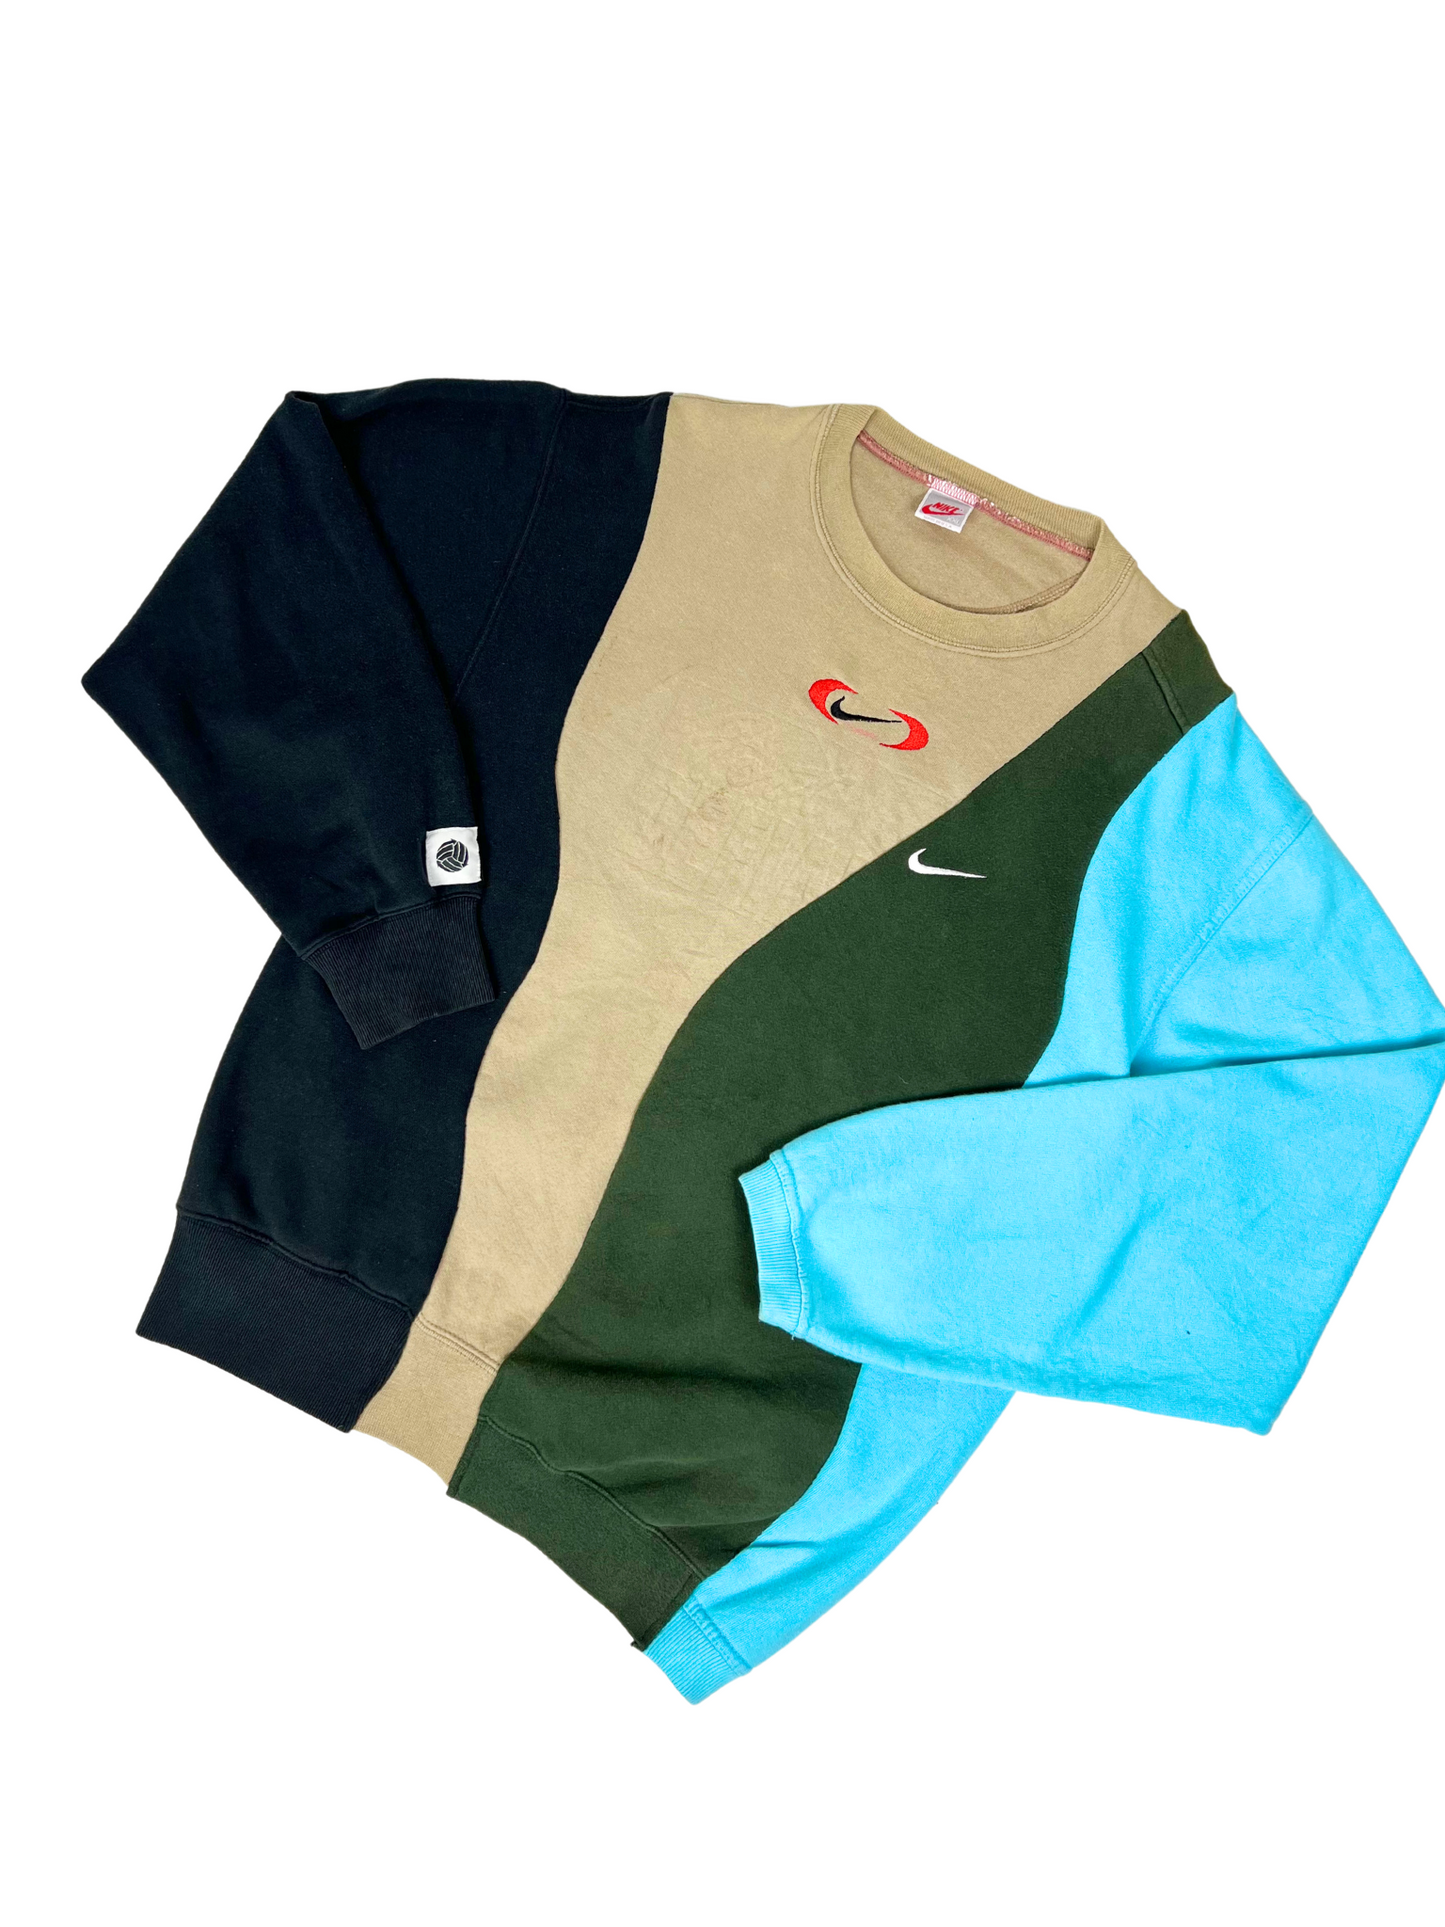 Reworked Nike Sweatshirt (M) #1